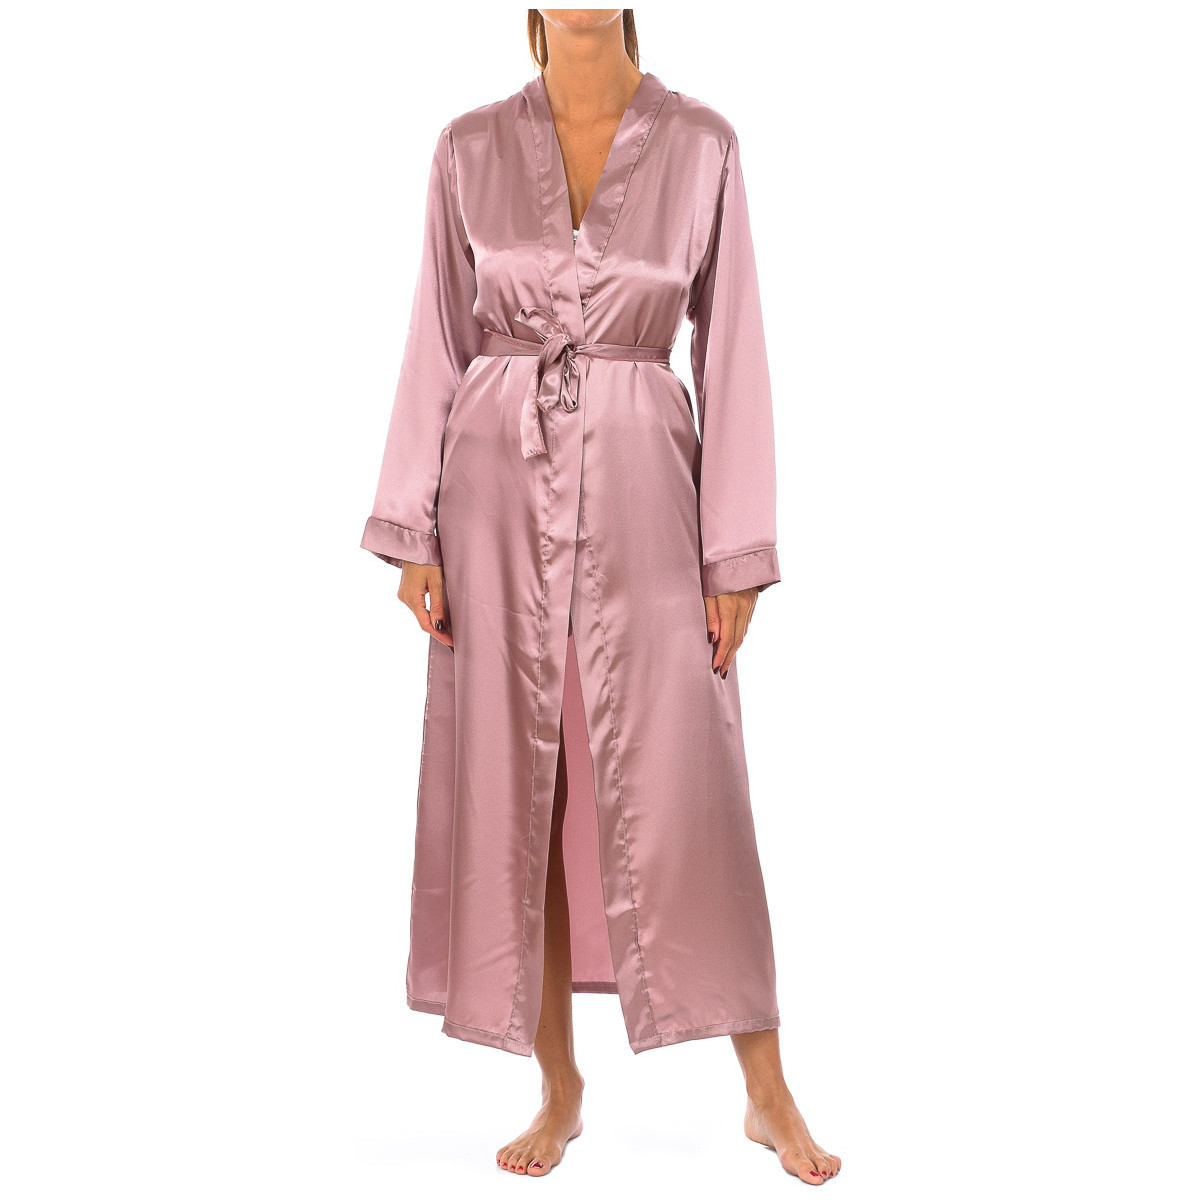 textil Dam Pyjamas/nattlinne Kisses&Love 2116-MINK Brun